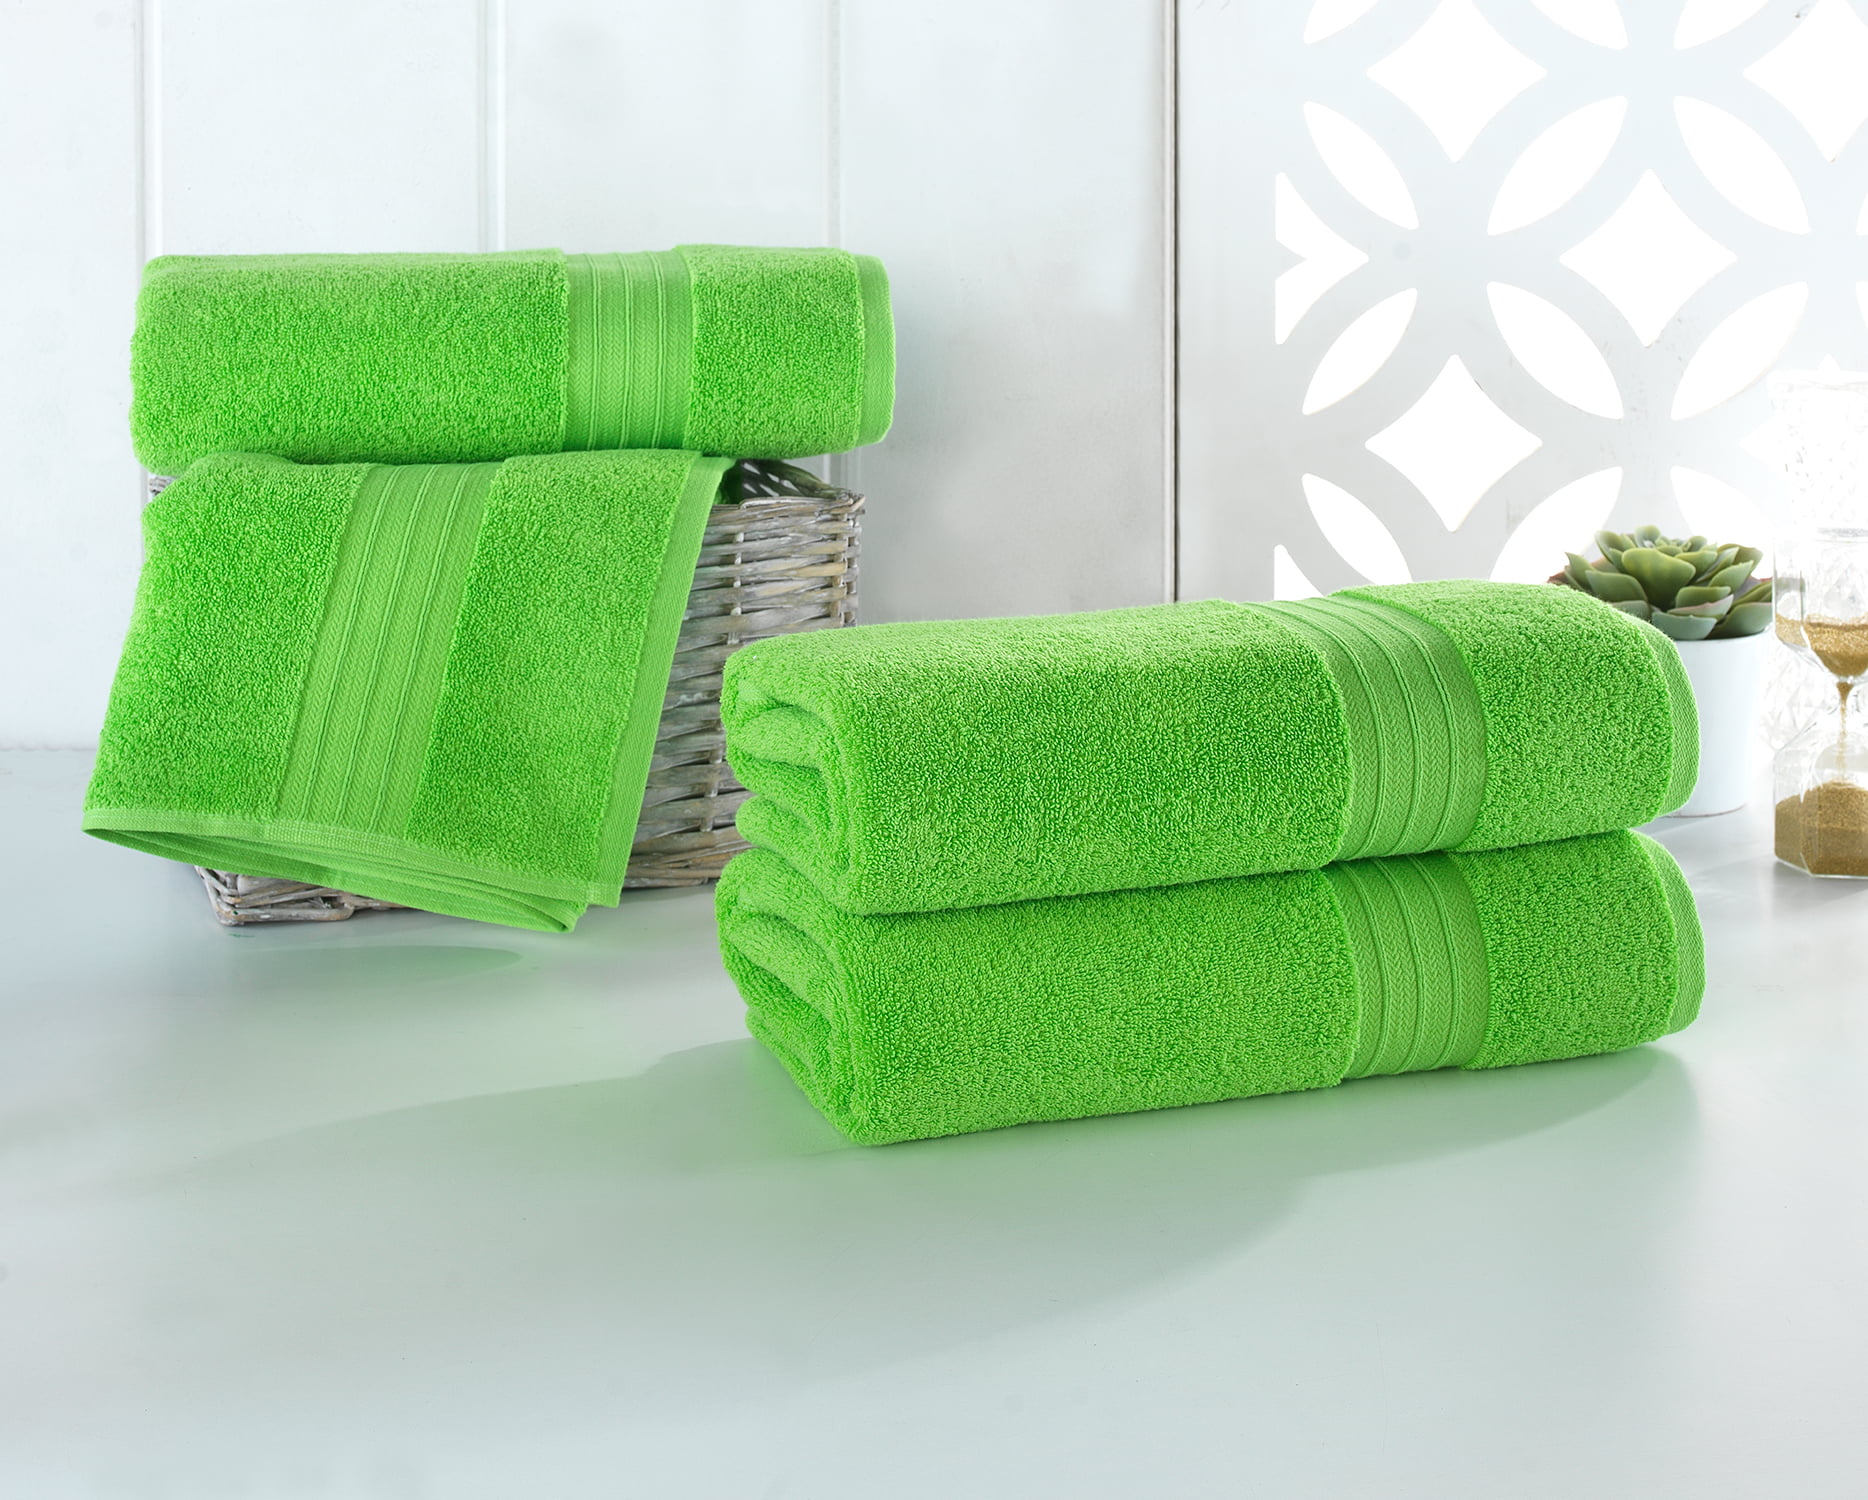 Zimmer 4 Piece Turkish Cotton Bath Towel Set (Set of 4) Highland Dunes Color: Green